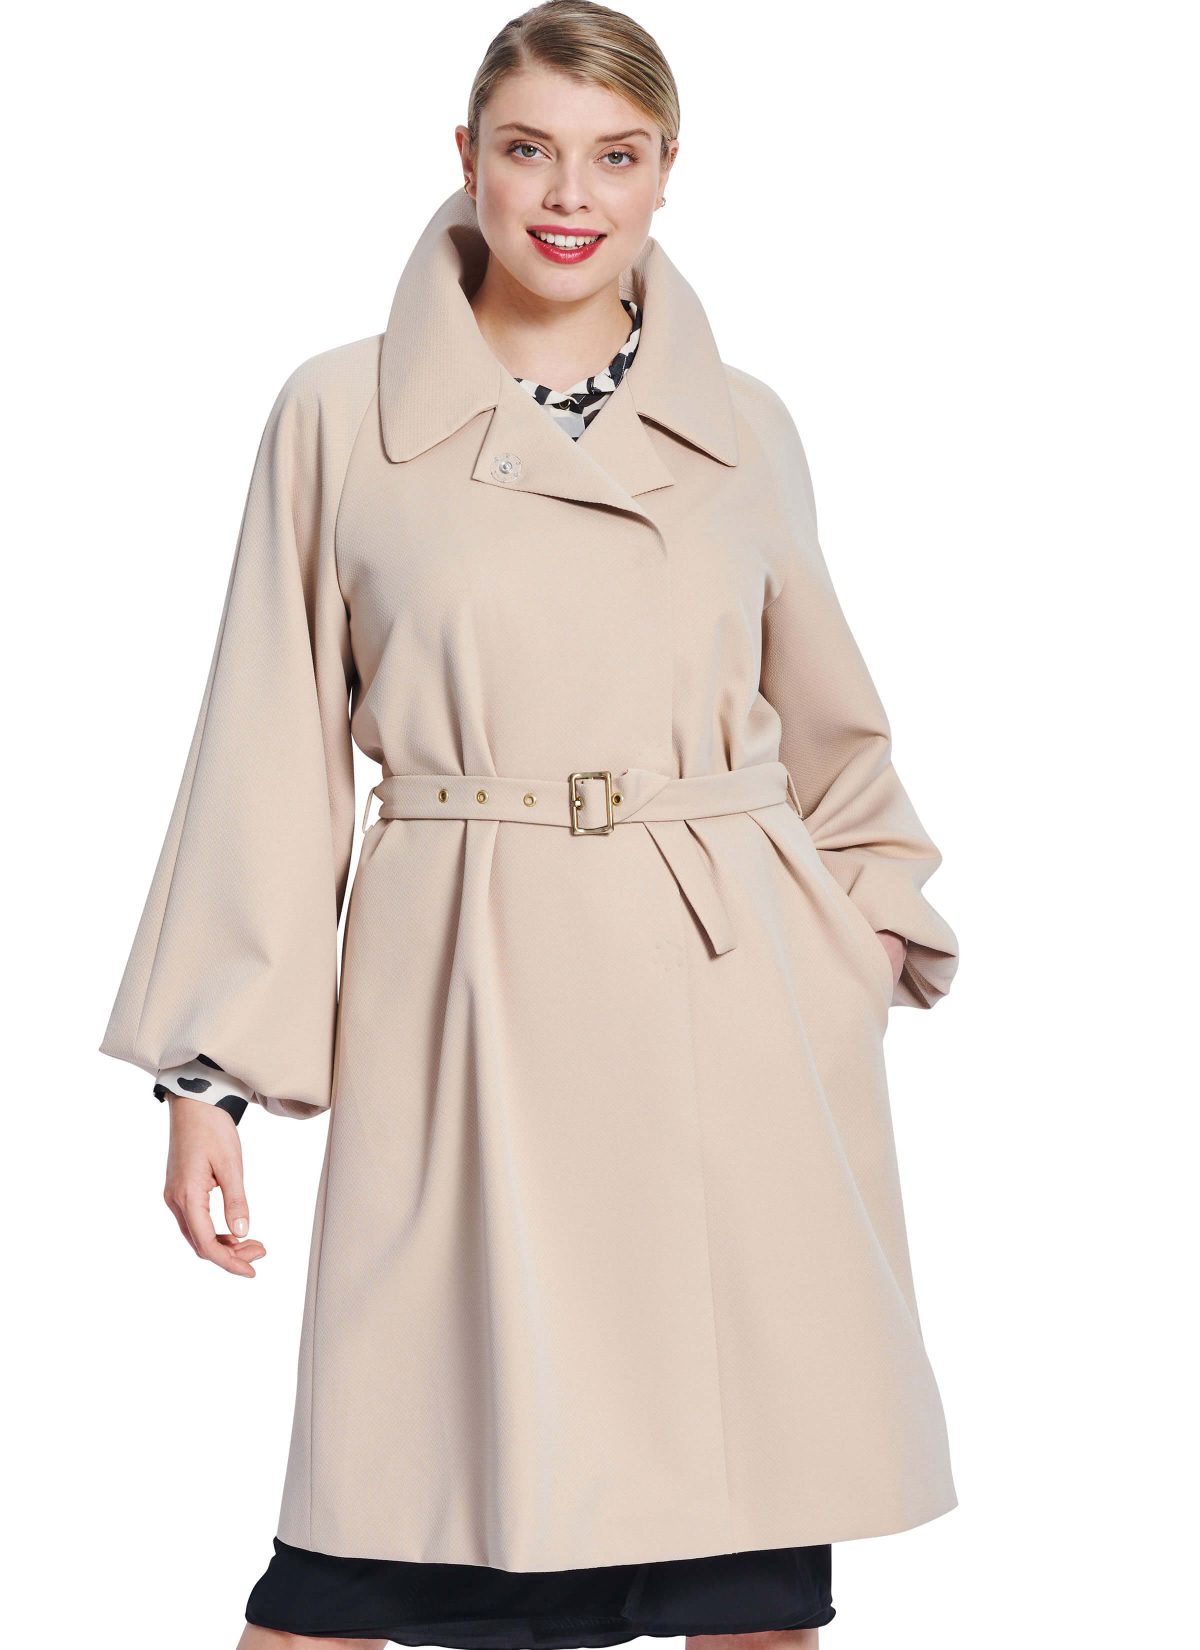 Burda Style Pattern 5824 Misses' Jacket & Coat